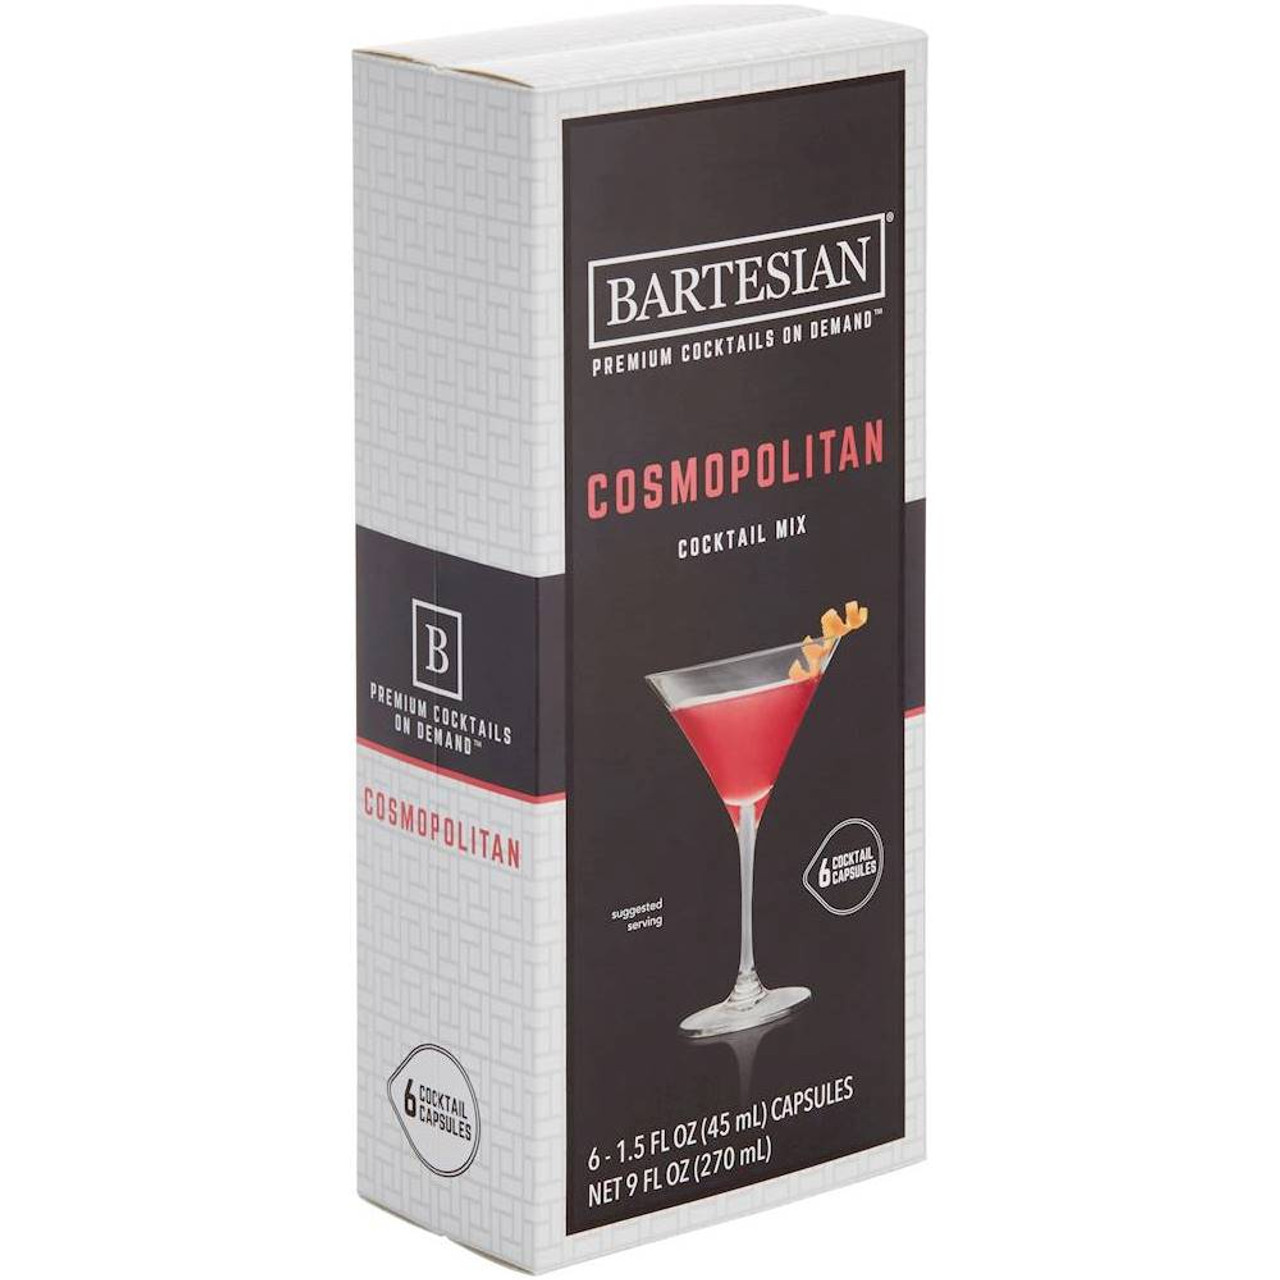 Bartesian - Cosmopolitan Cocktail Mix Capsule for Bartesian Cocktail Maker (6-Pack)